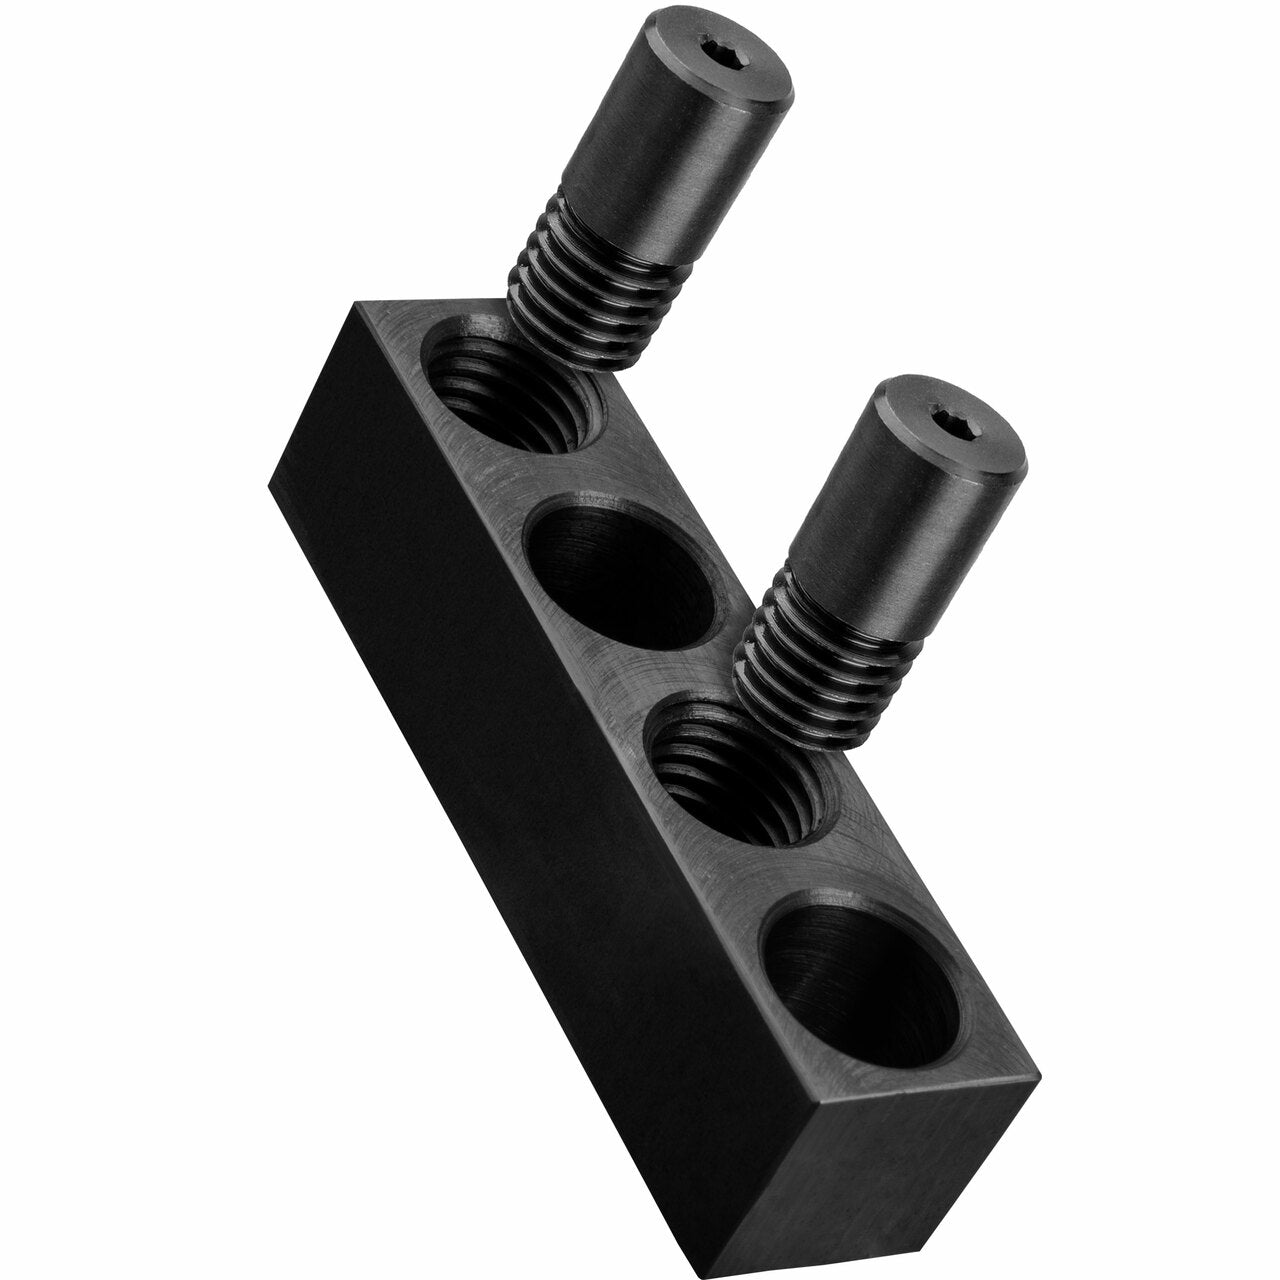 Fence Pin Blocks (4"x1"x1") - 5/8" System